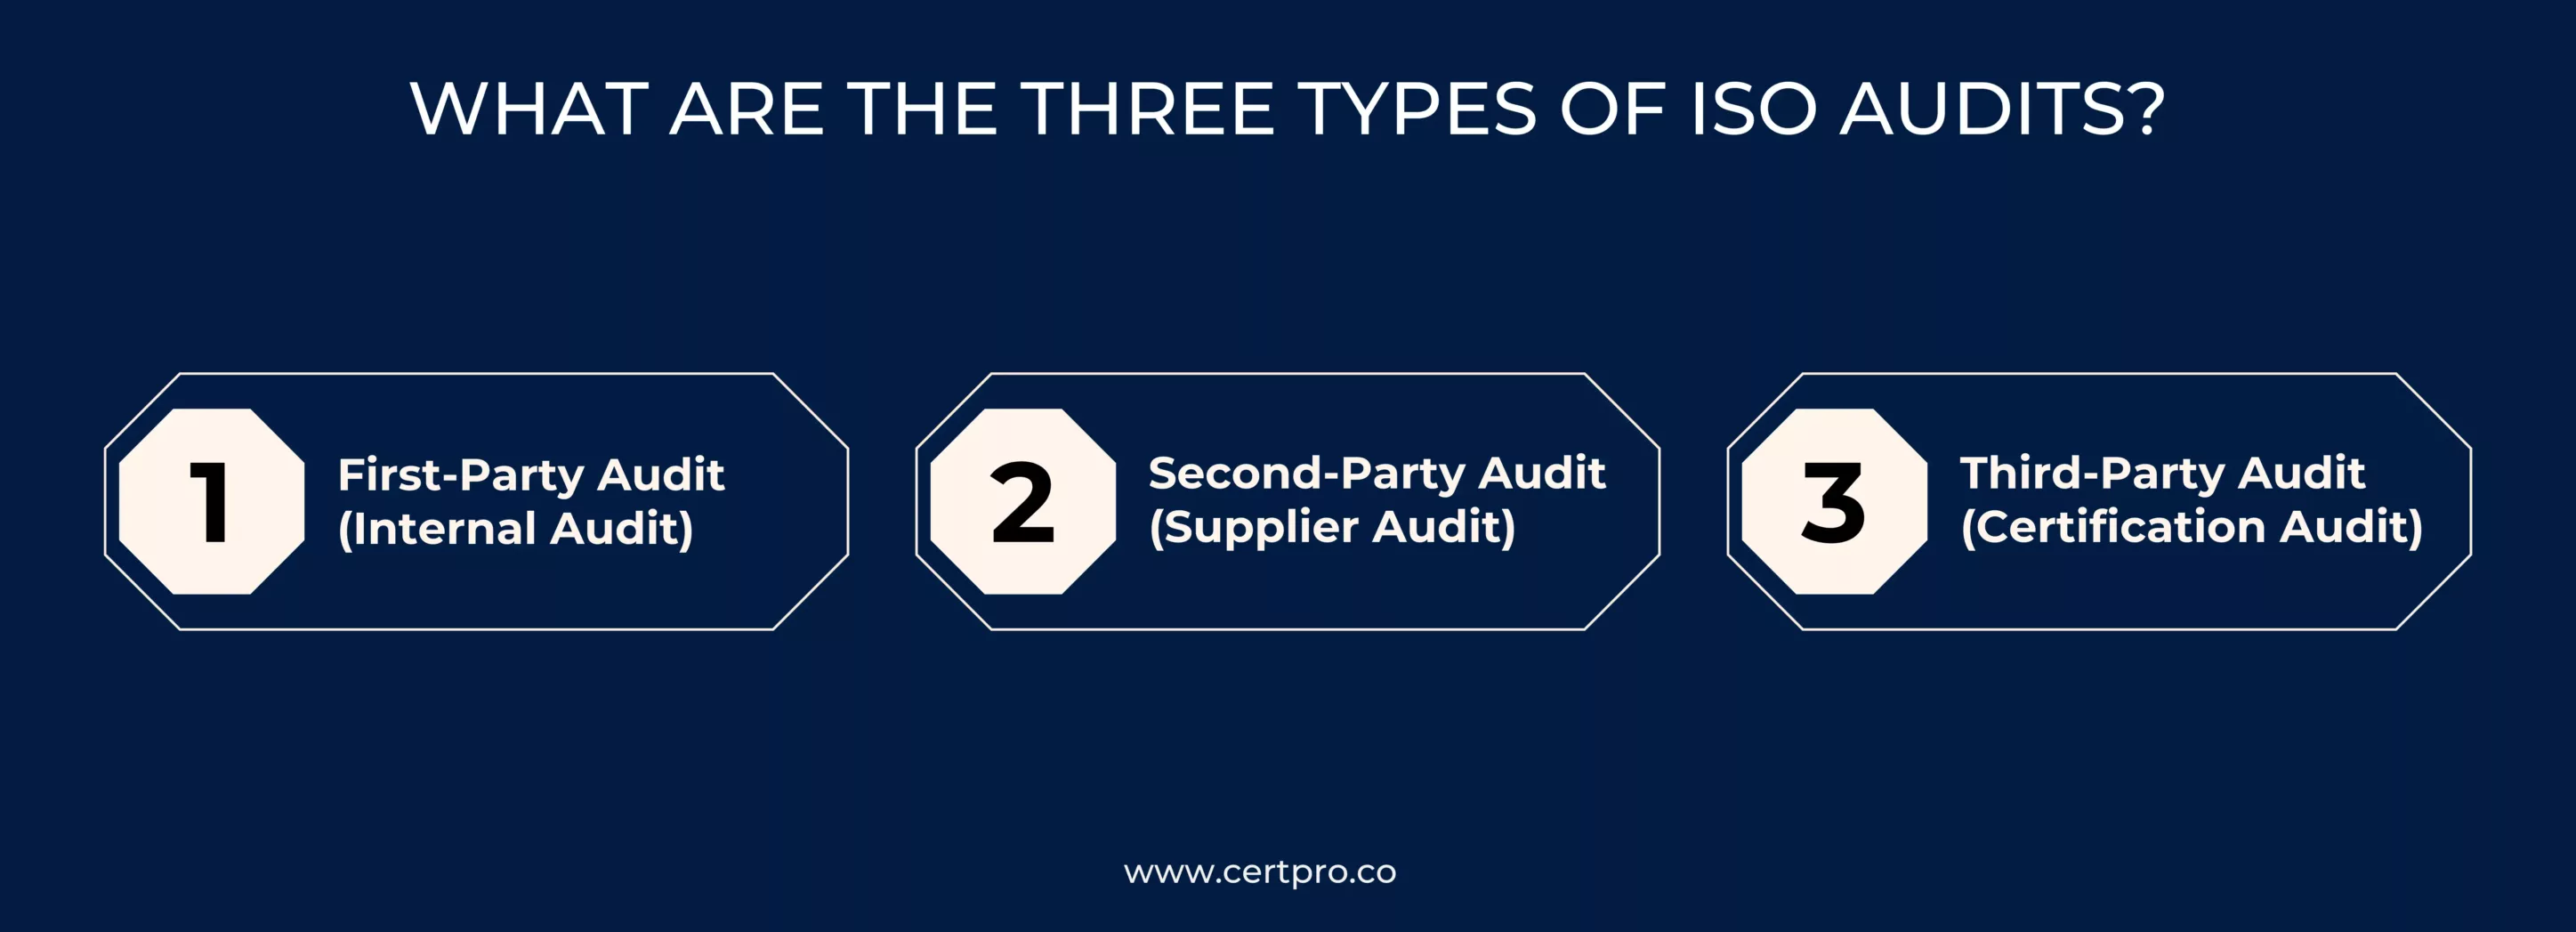 THREE TYPES OF ISO AUDITS